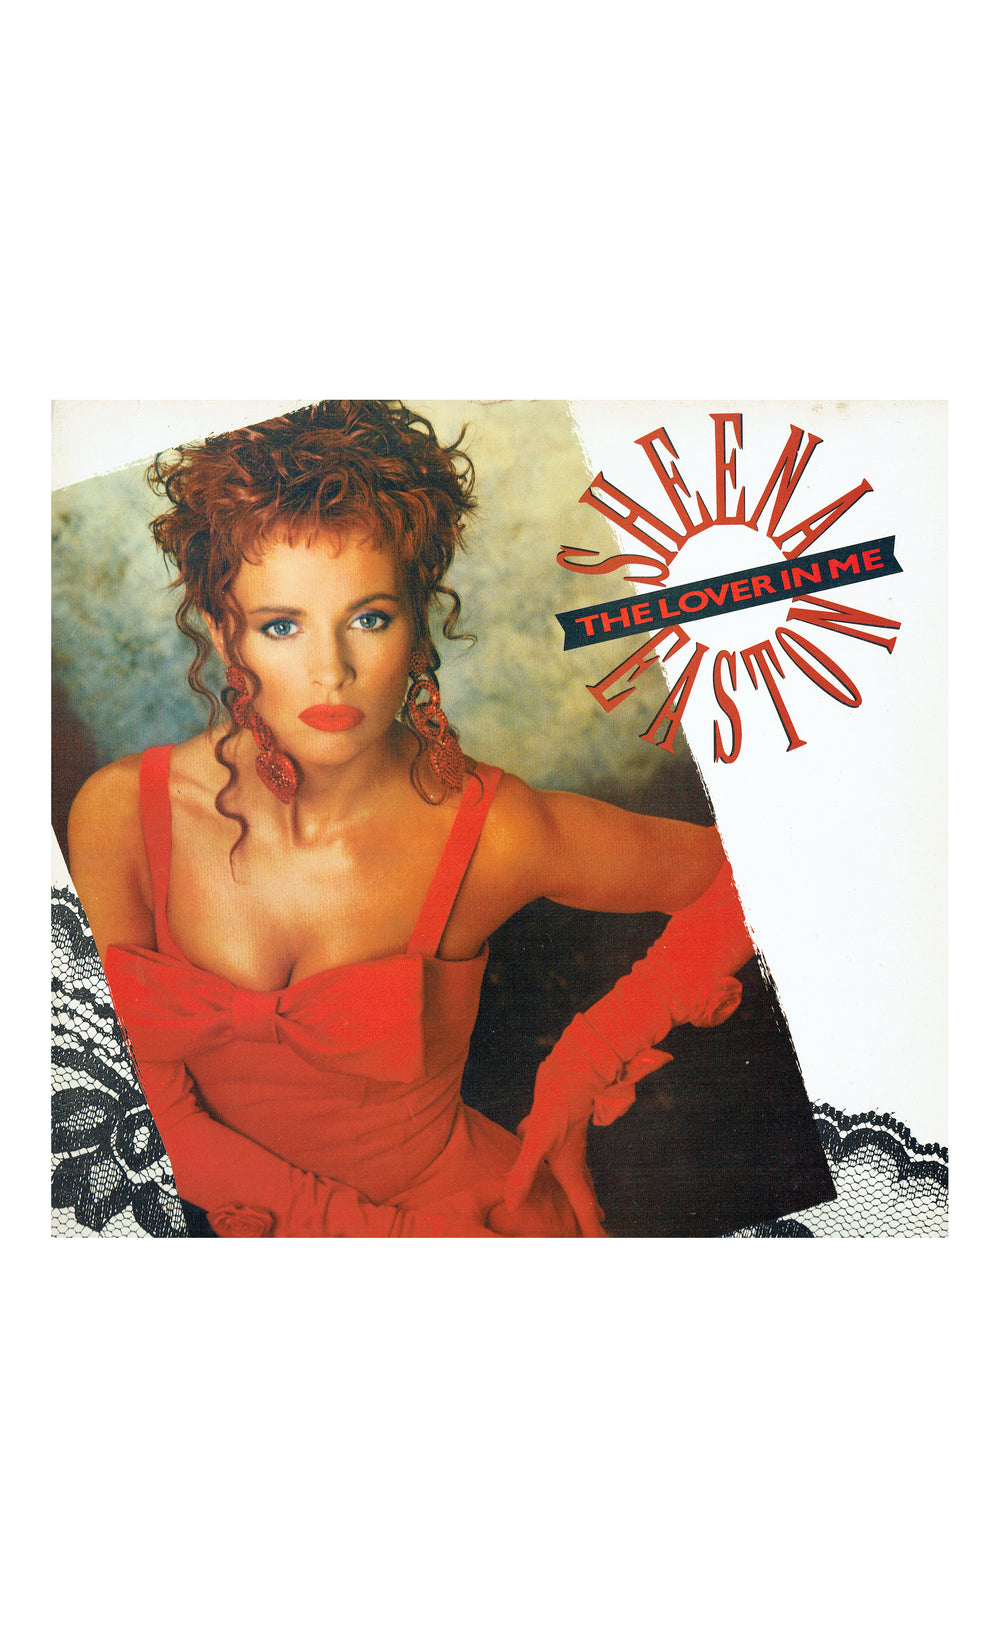 Sheena Easton The Lover In Me Vinyl Album USA 1998 Original Prince